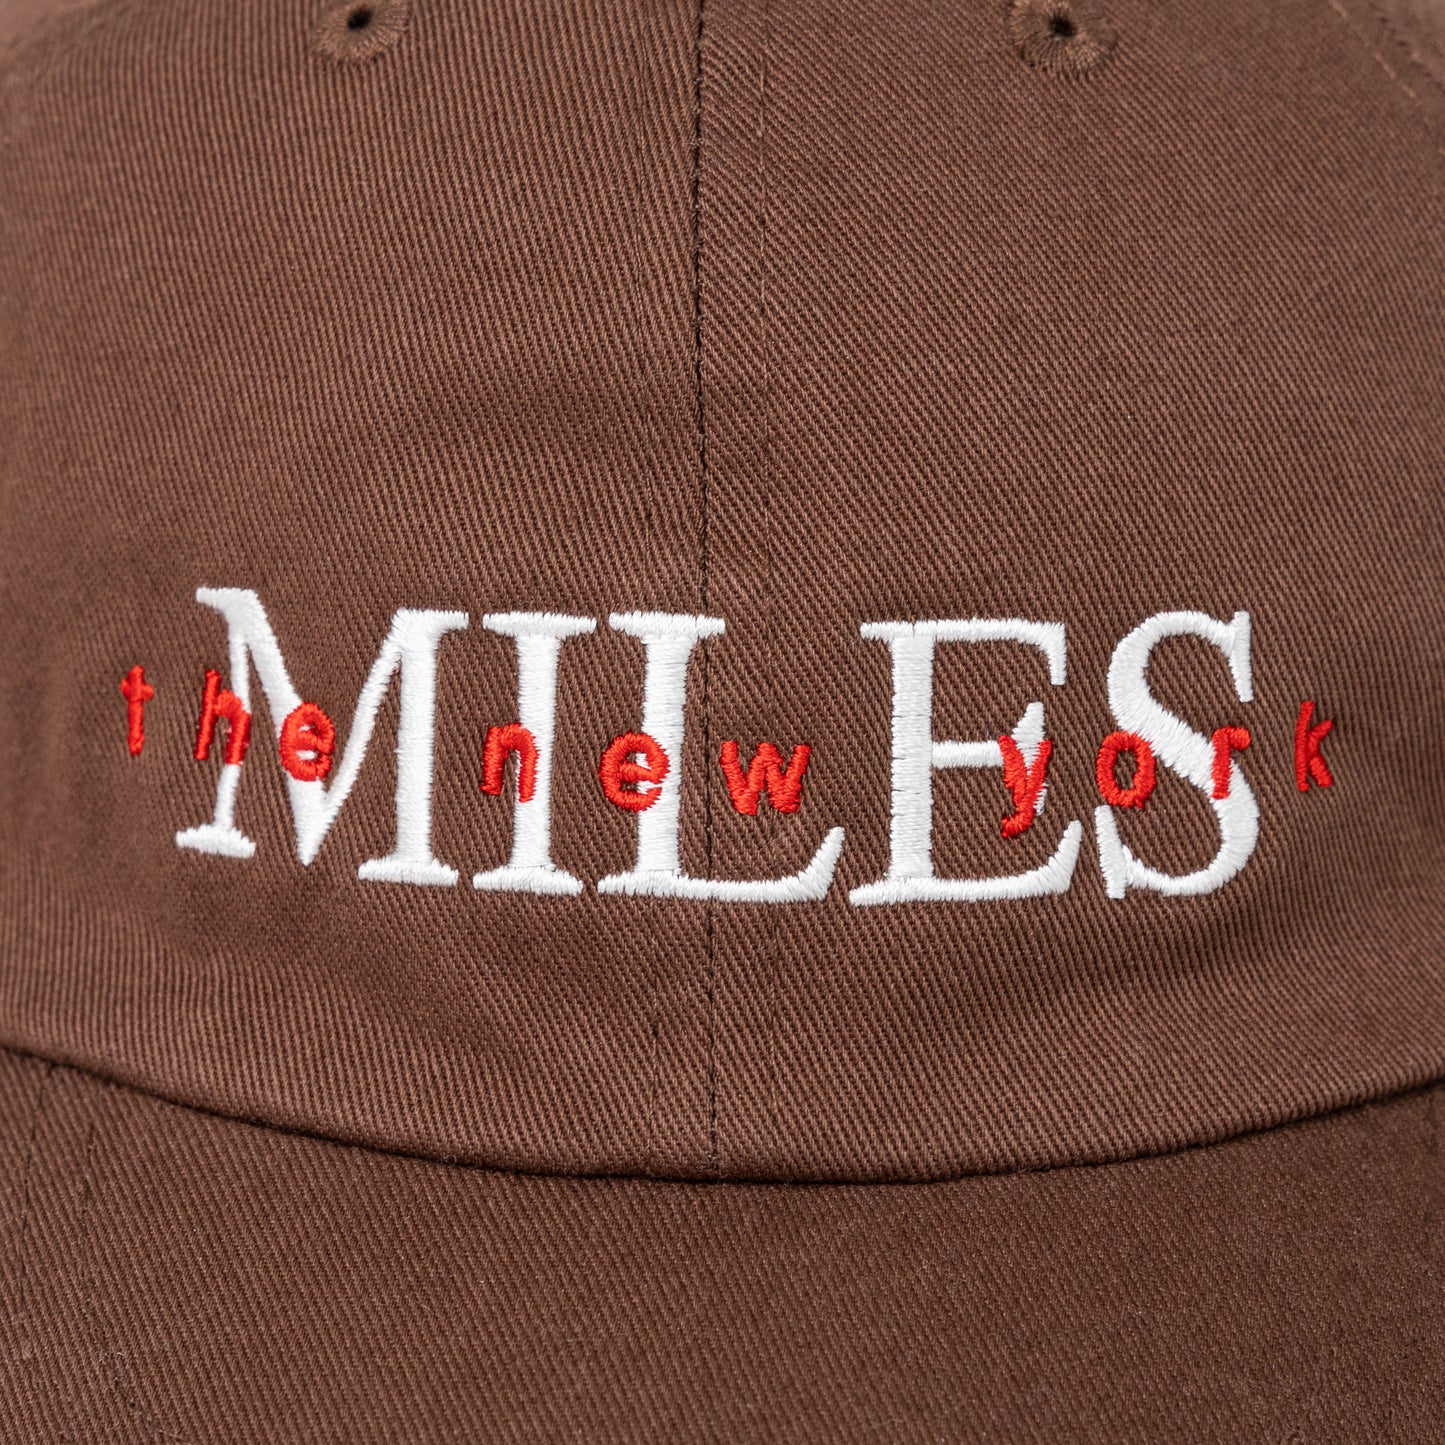 Miles Tour Hat – Brown